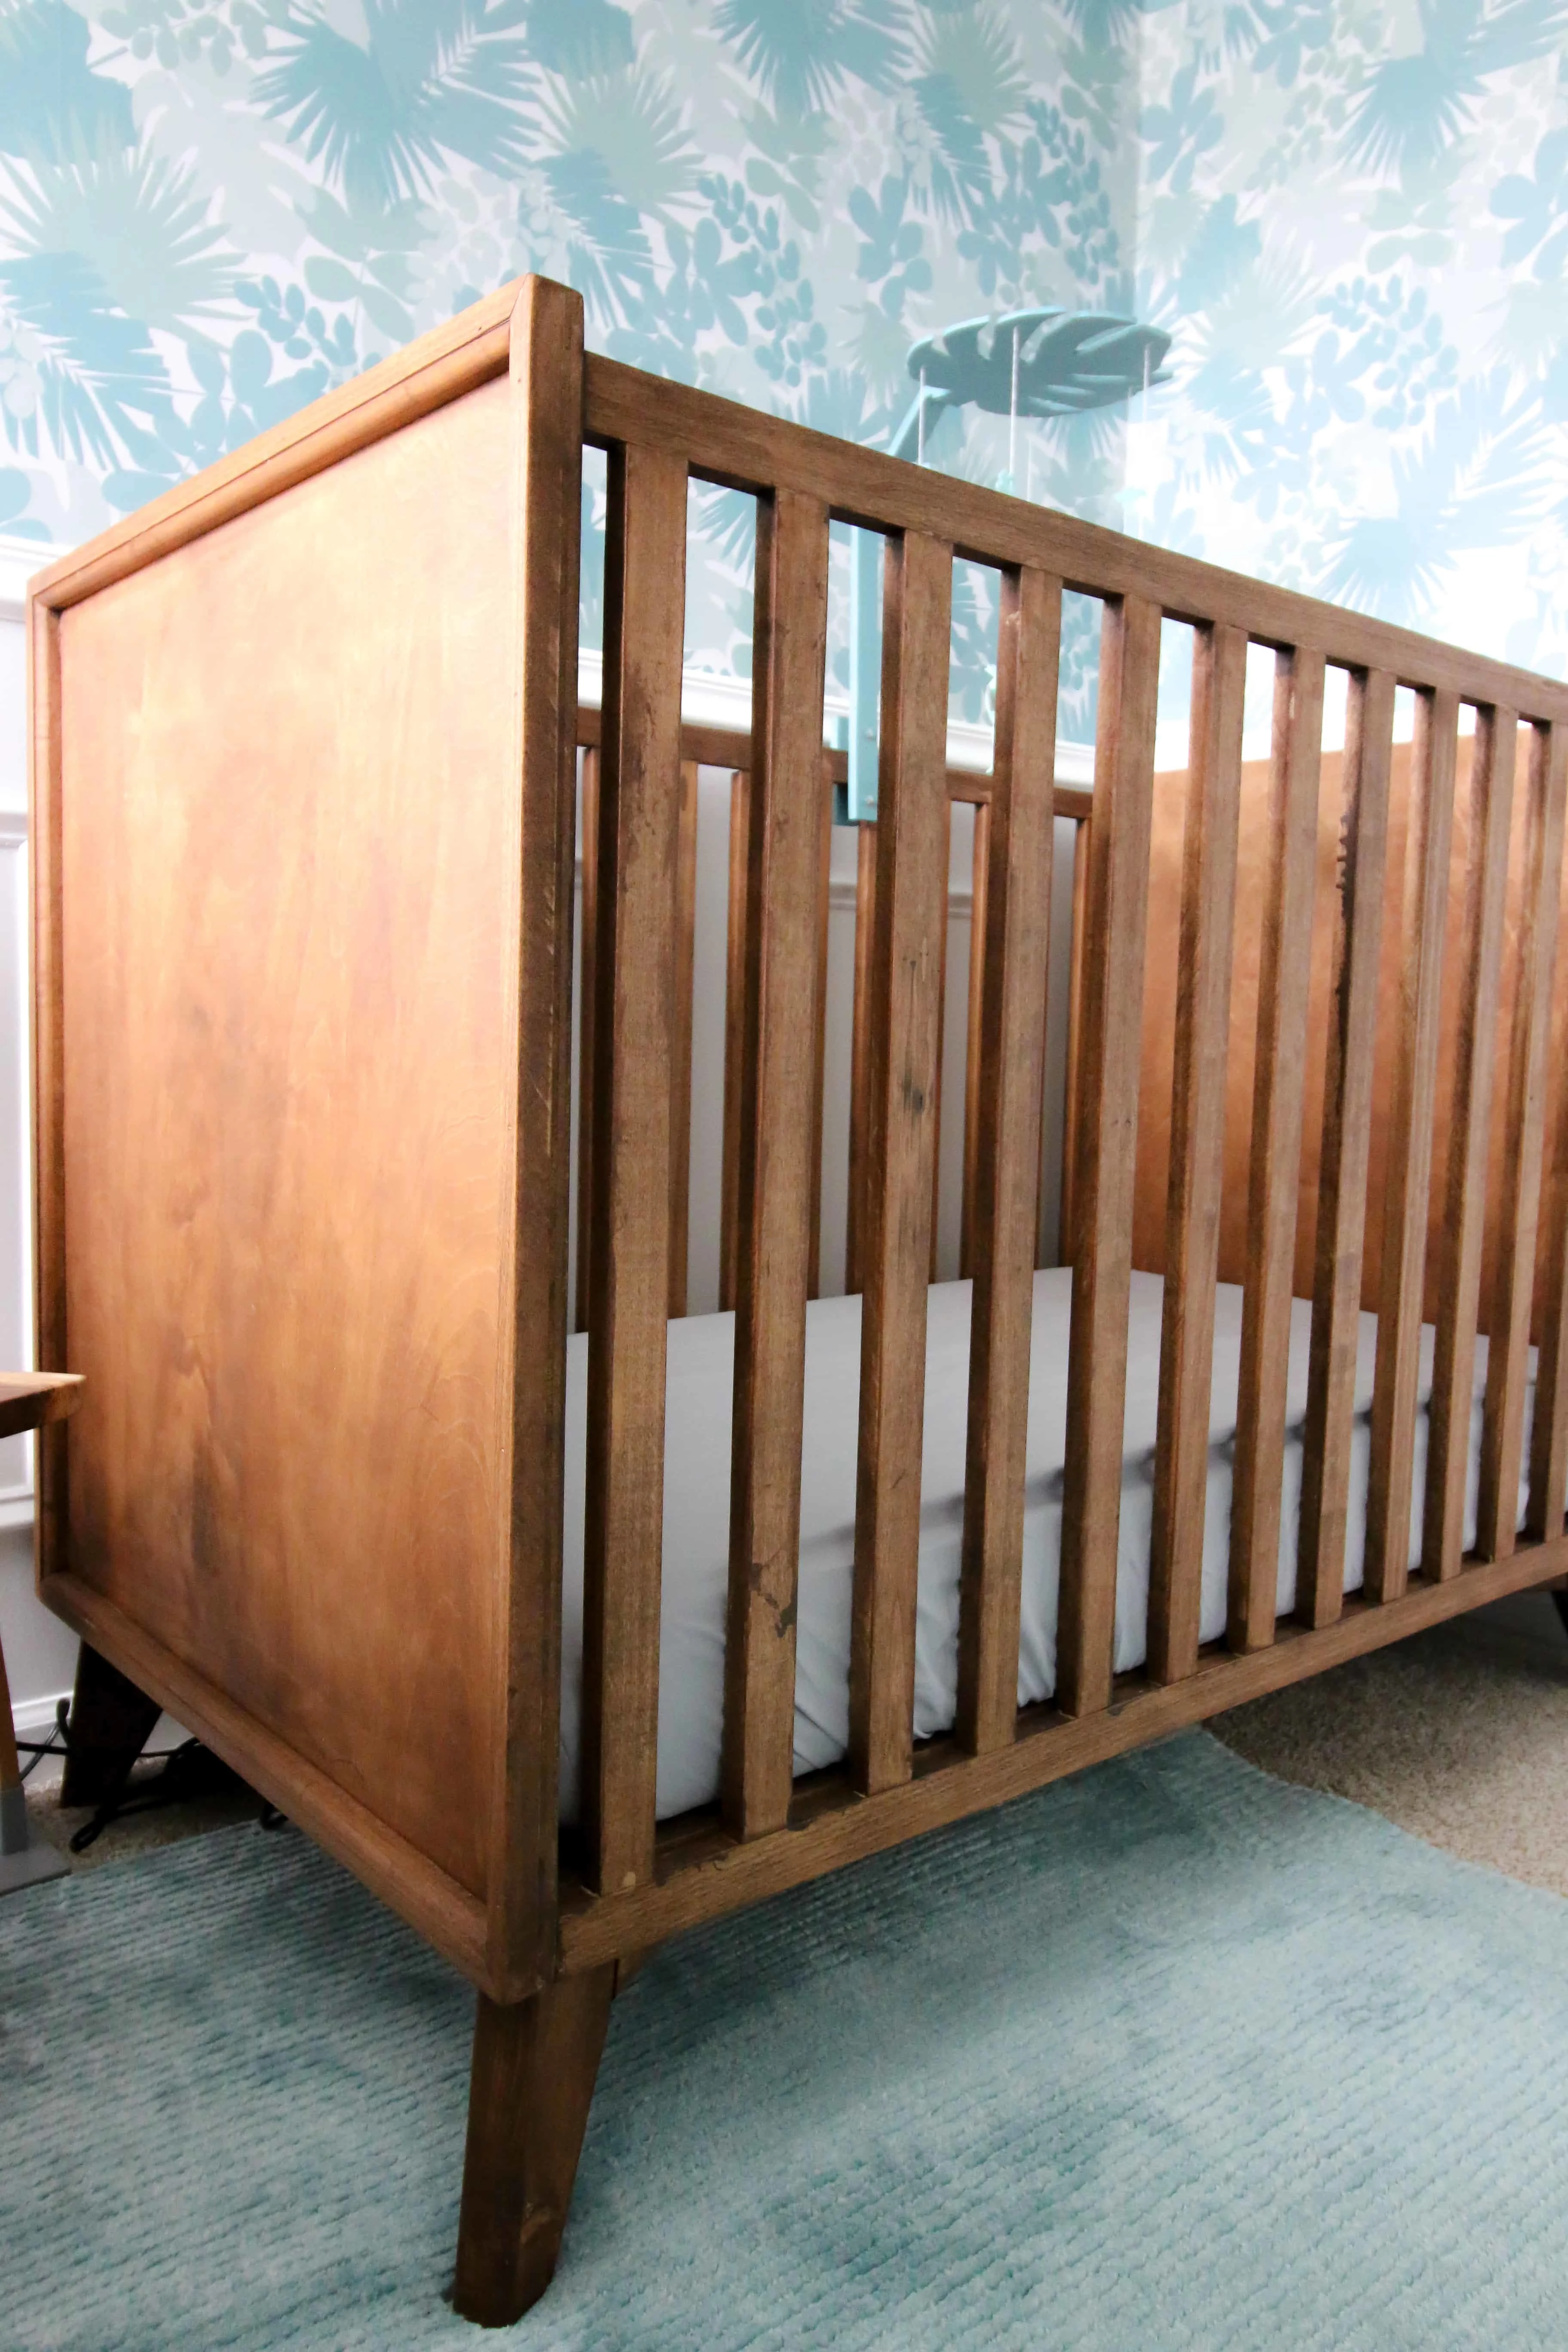 DIY mid century modern crib